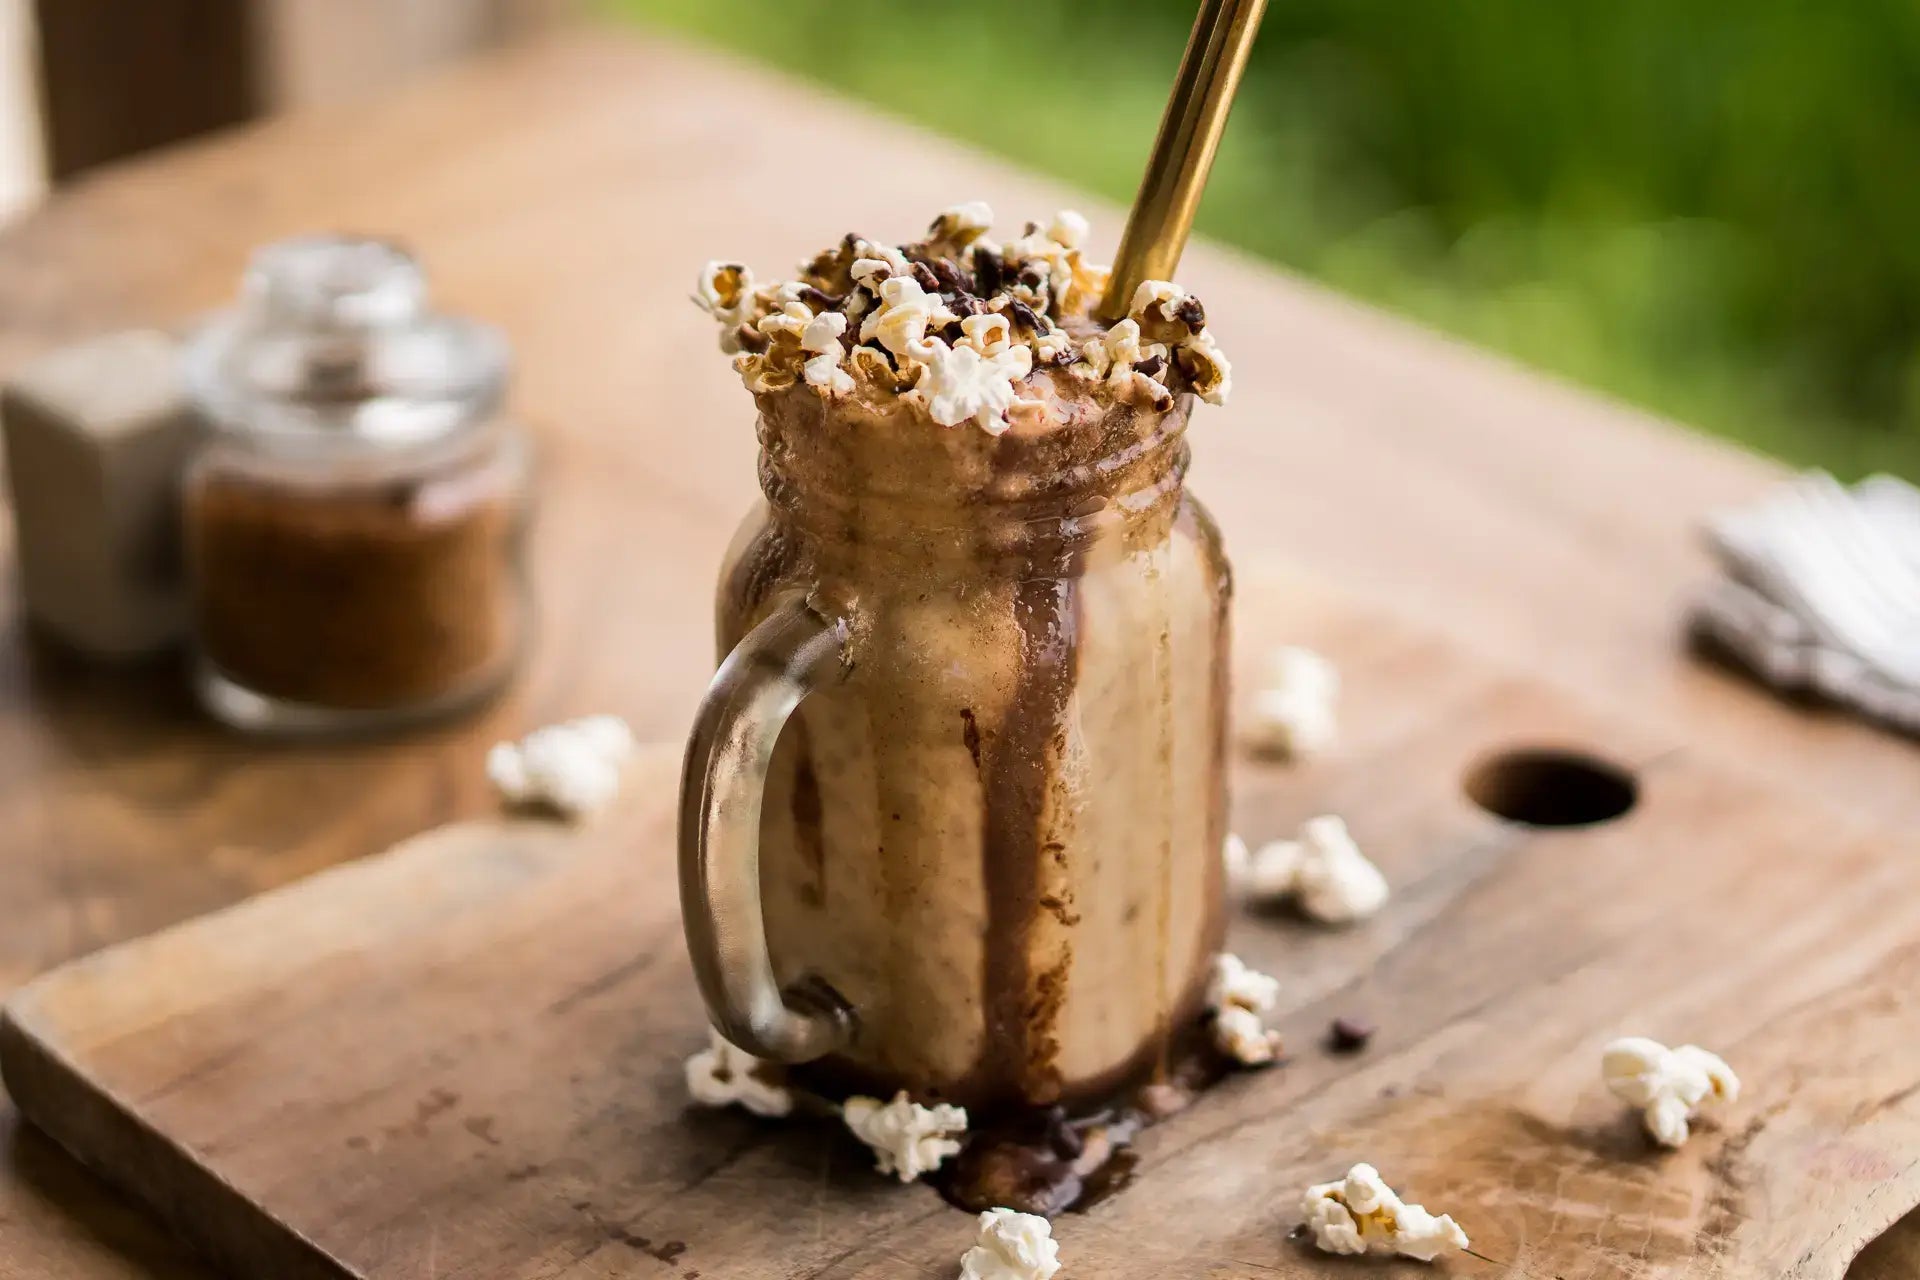 Vegan chocolate Smoothie with popcorn on top sitting on wood table. Recipe inside Bali Vegan book